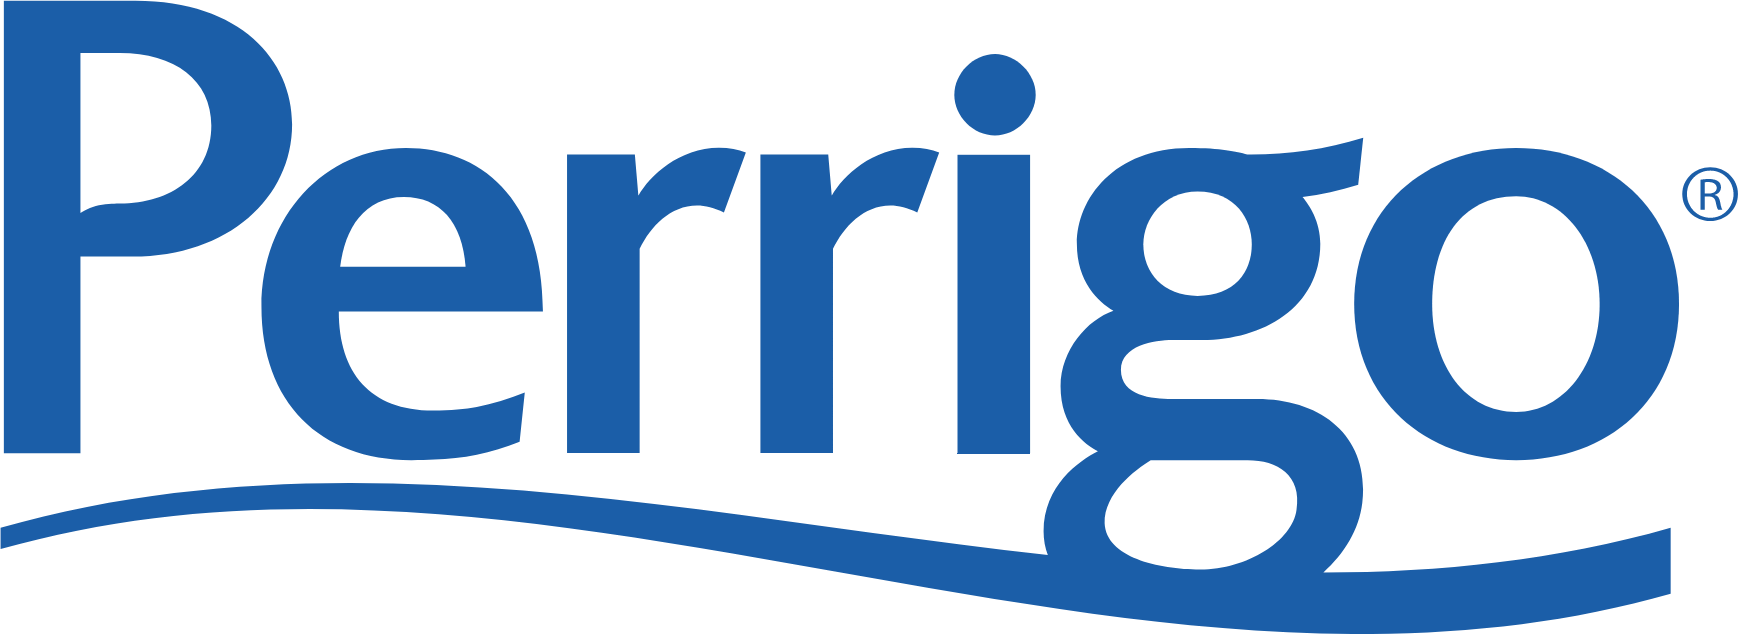 Perrigo logo large (transparent PNG)